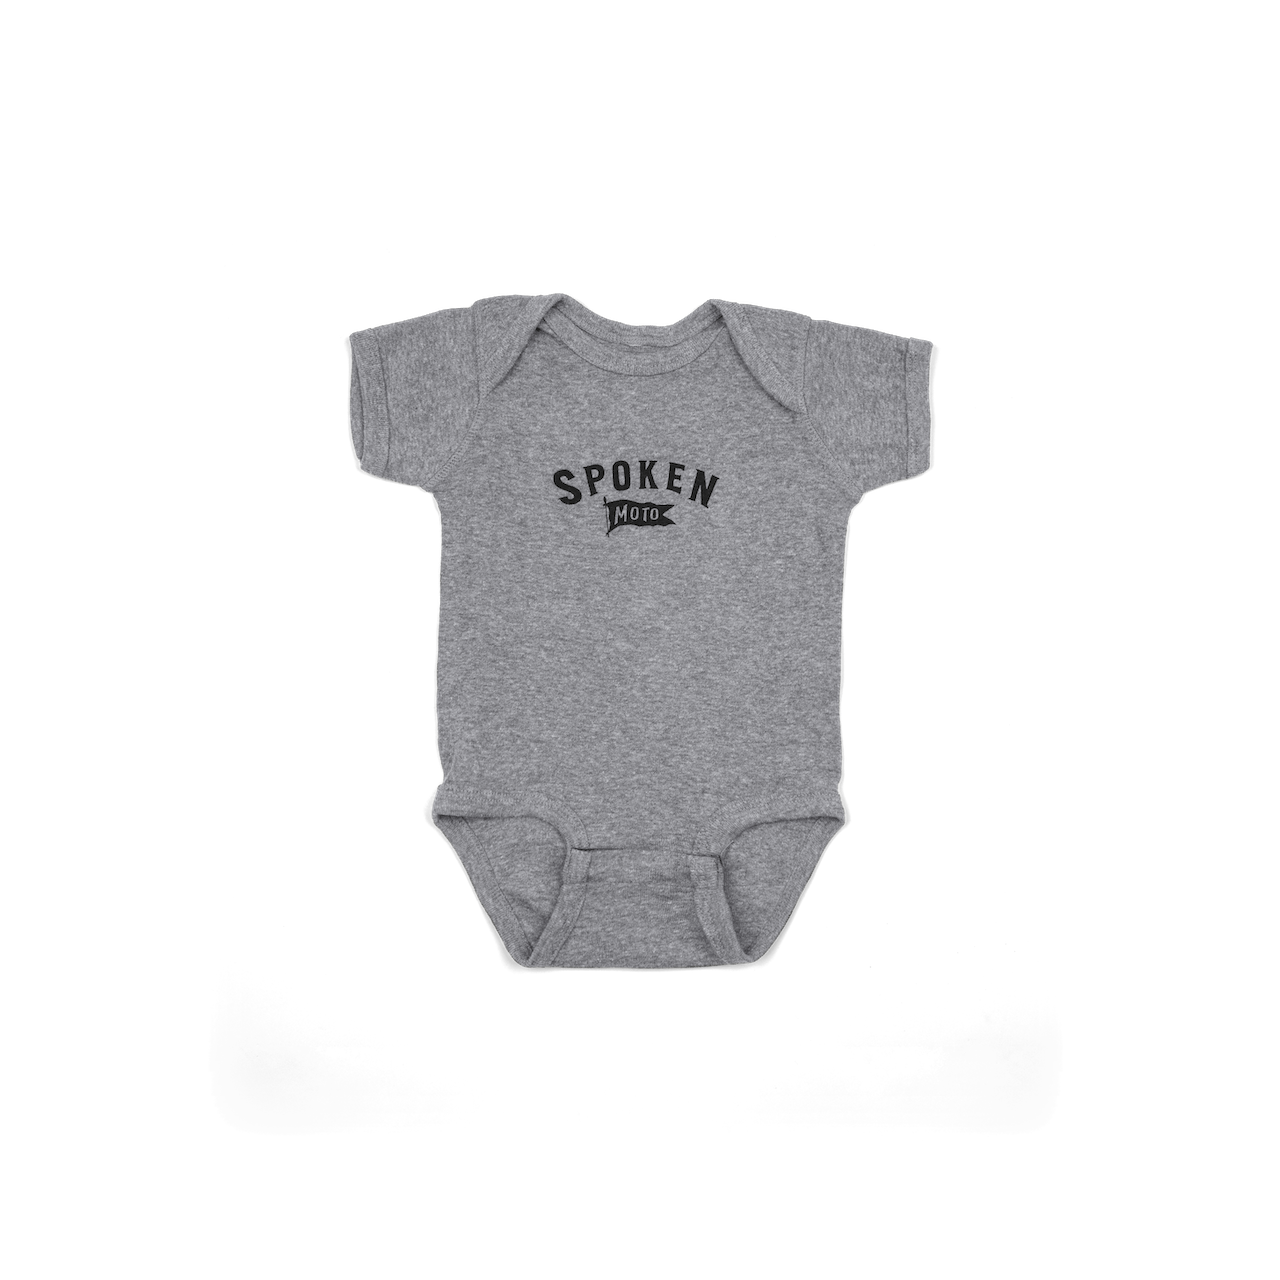 Grey Spoken Baby Onesie with Spoken Moto Flag logo on the center of the chest.